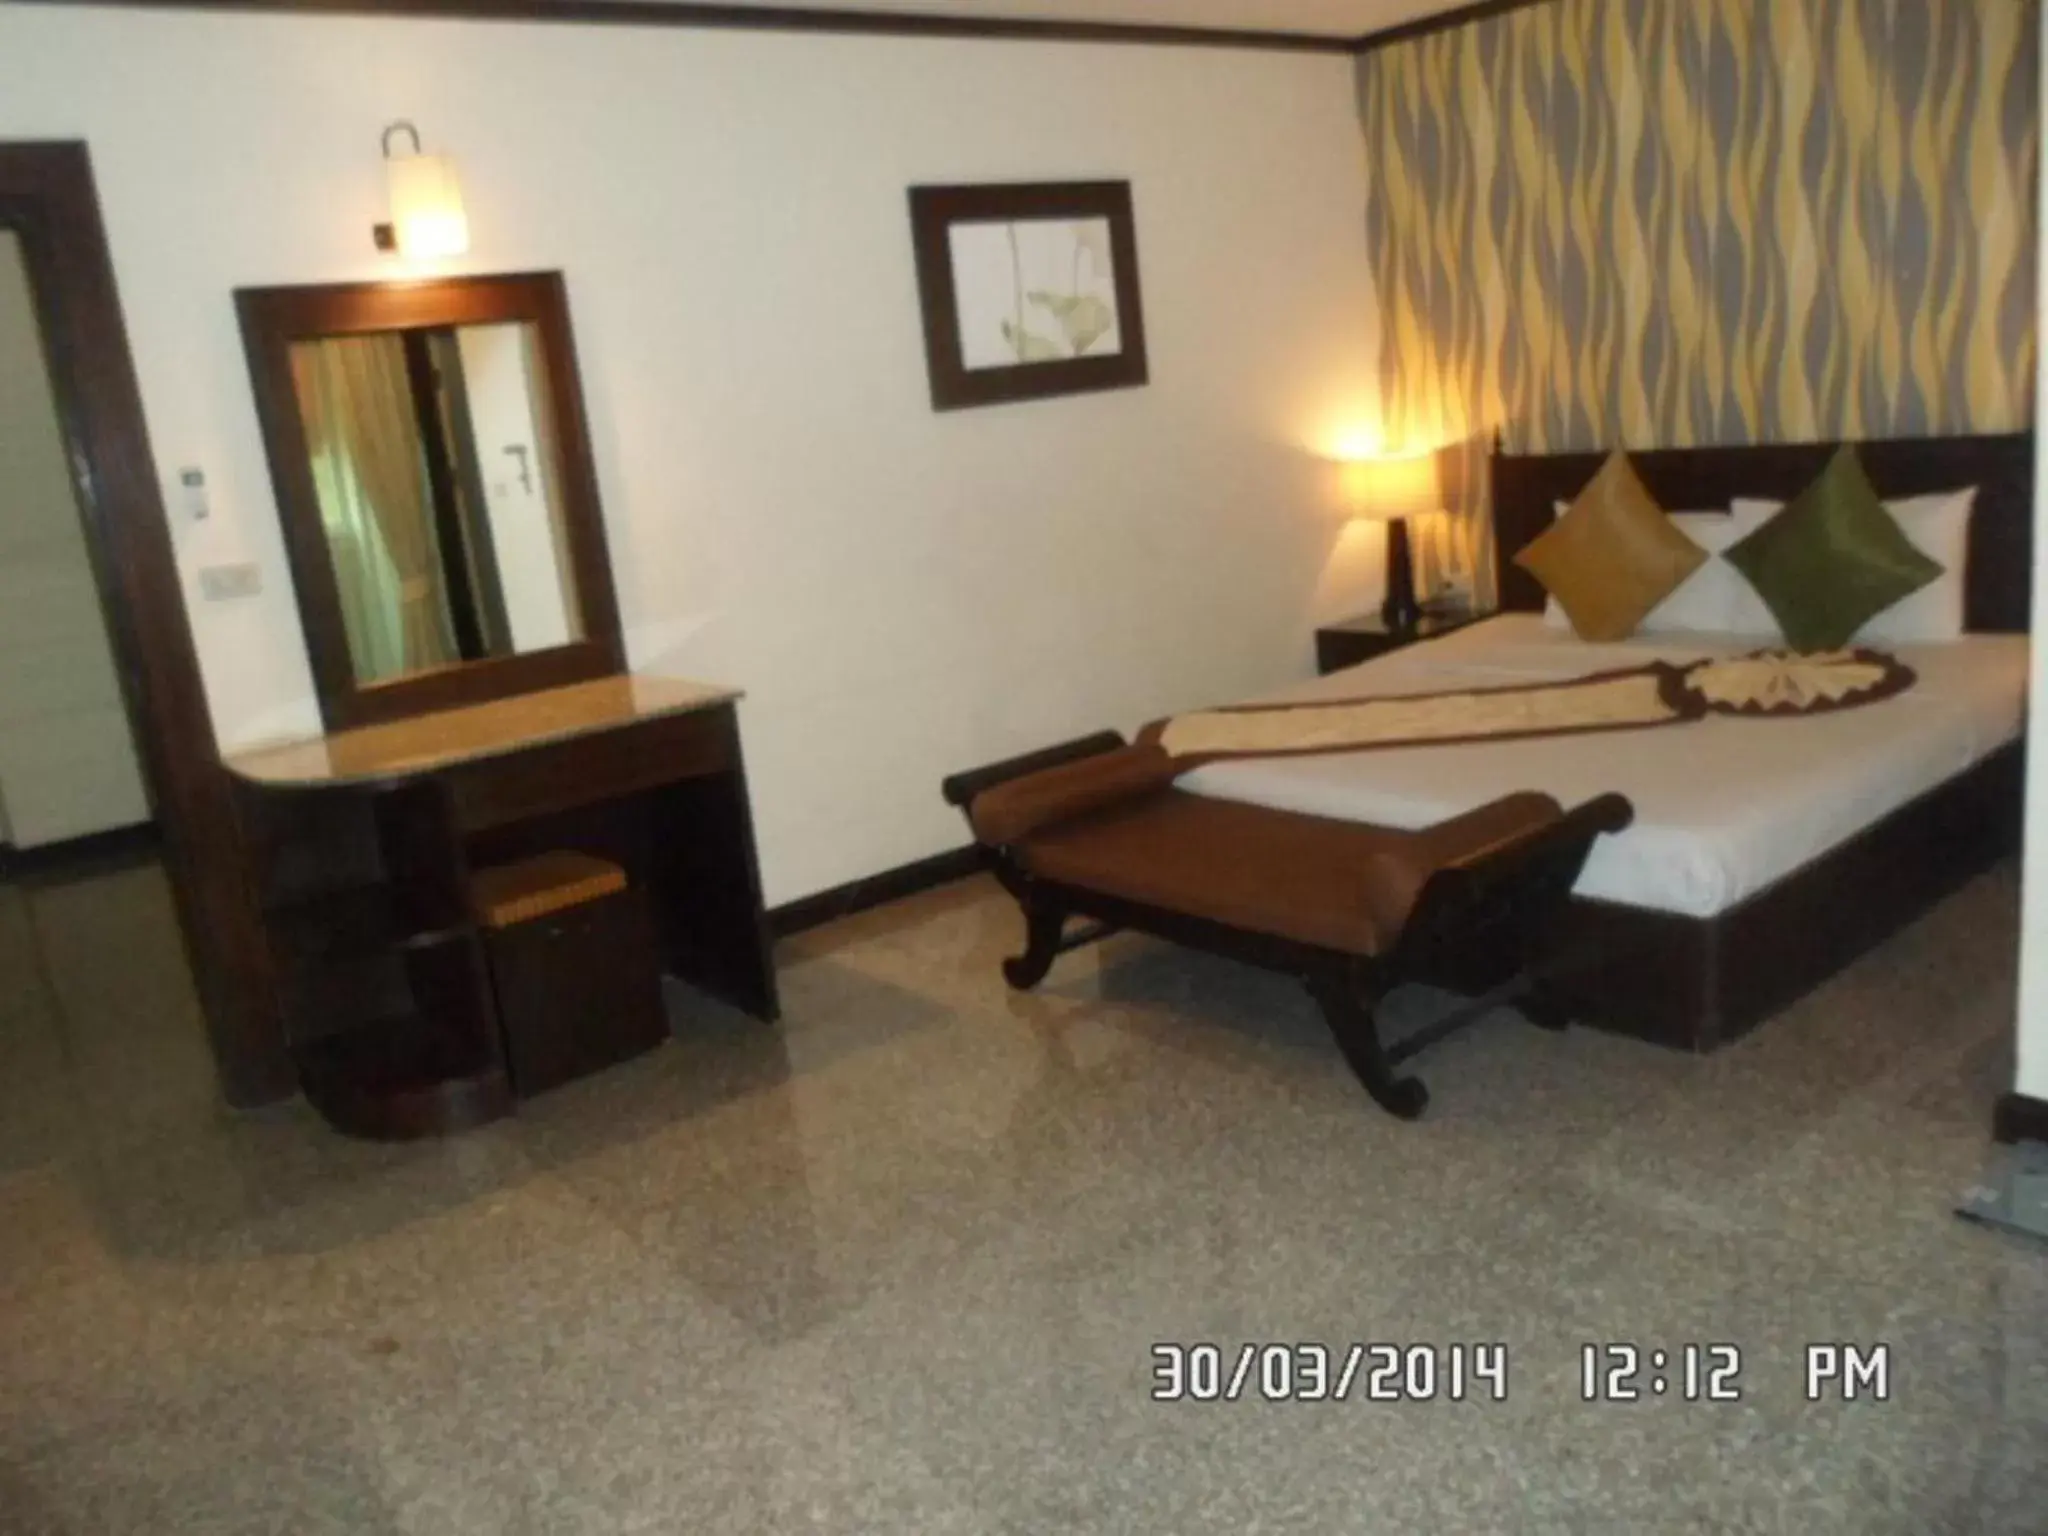 Bed in Royal Peninsula Hotel Chiangmai